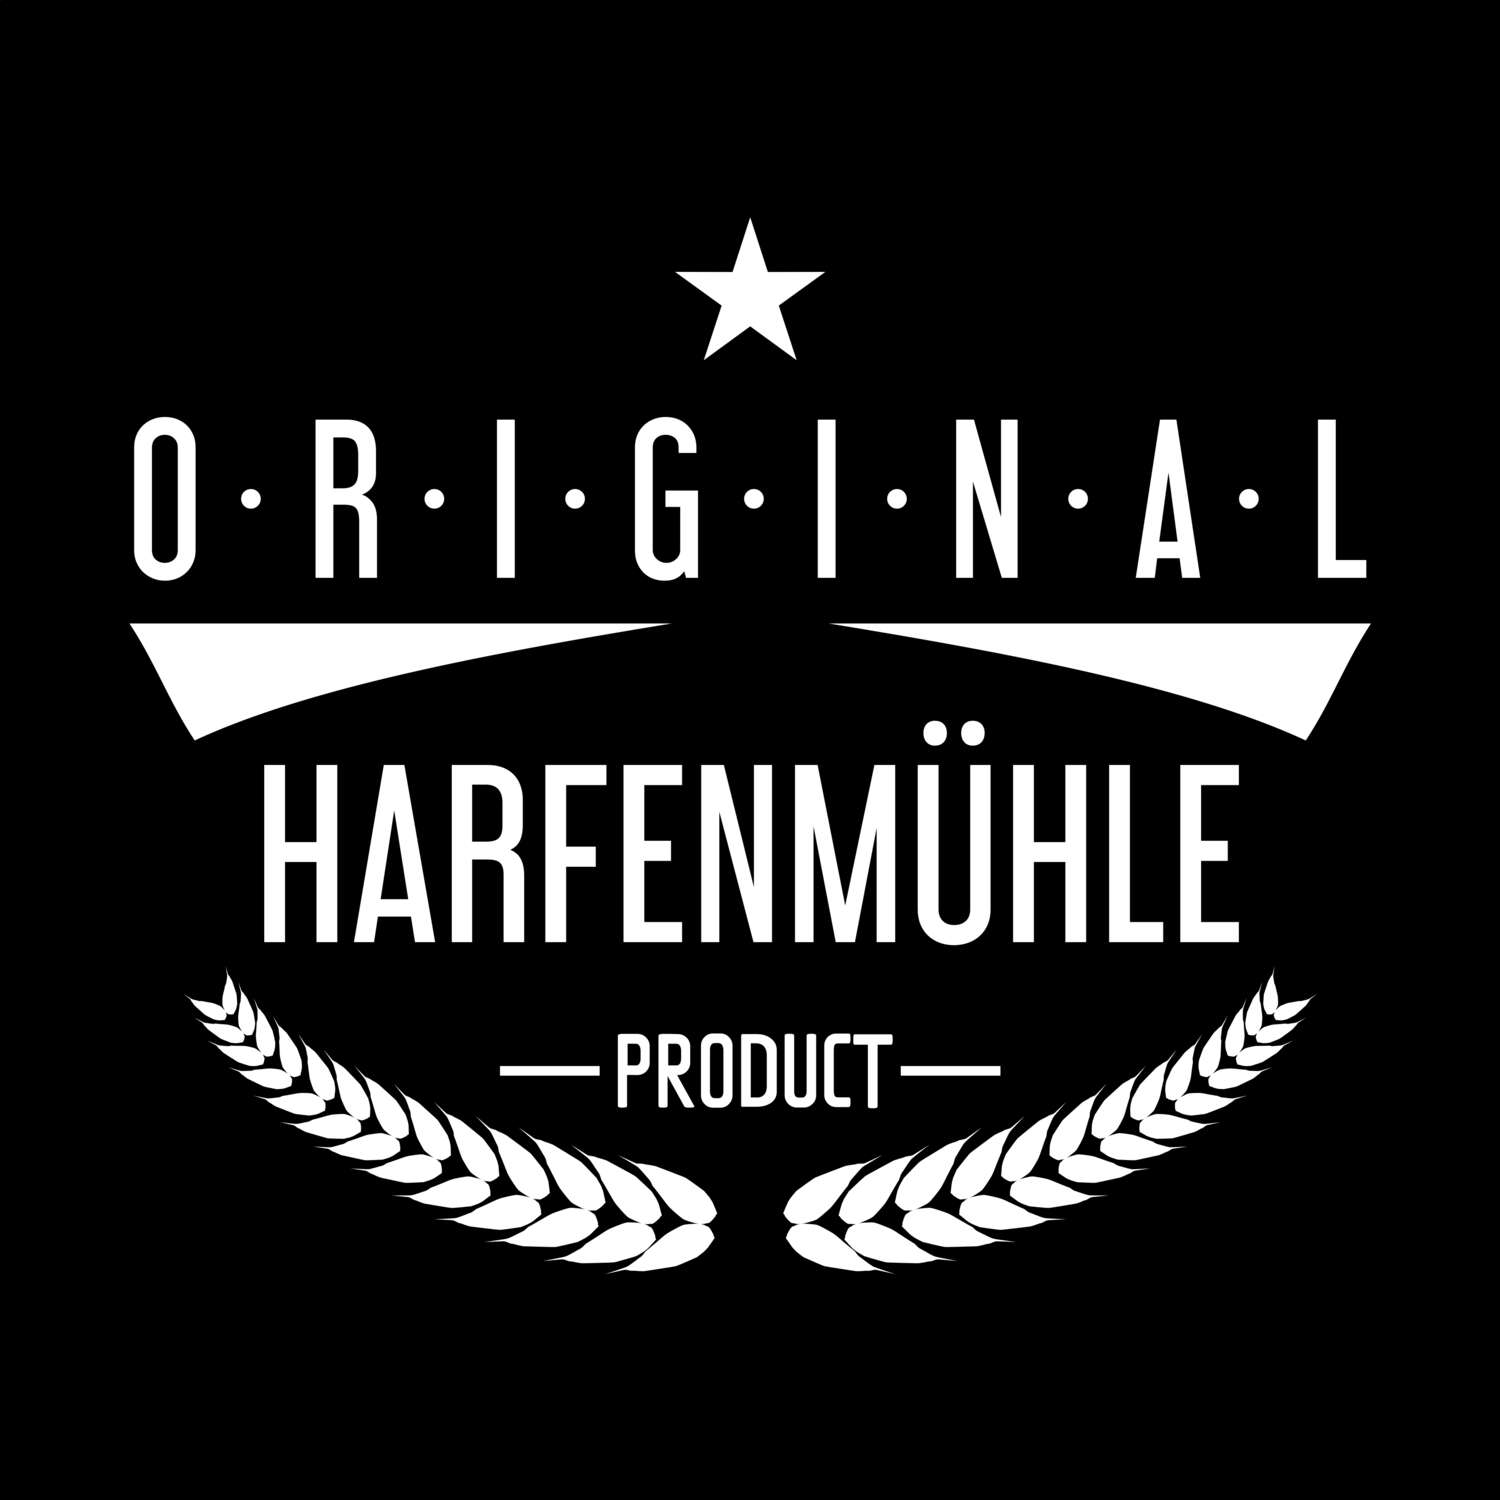 Harfenmühle T-Shirt »Original Product«